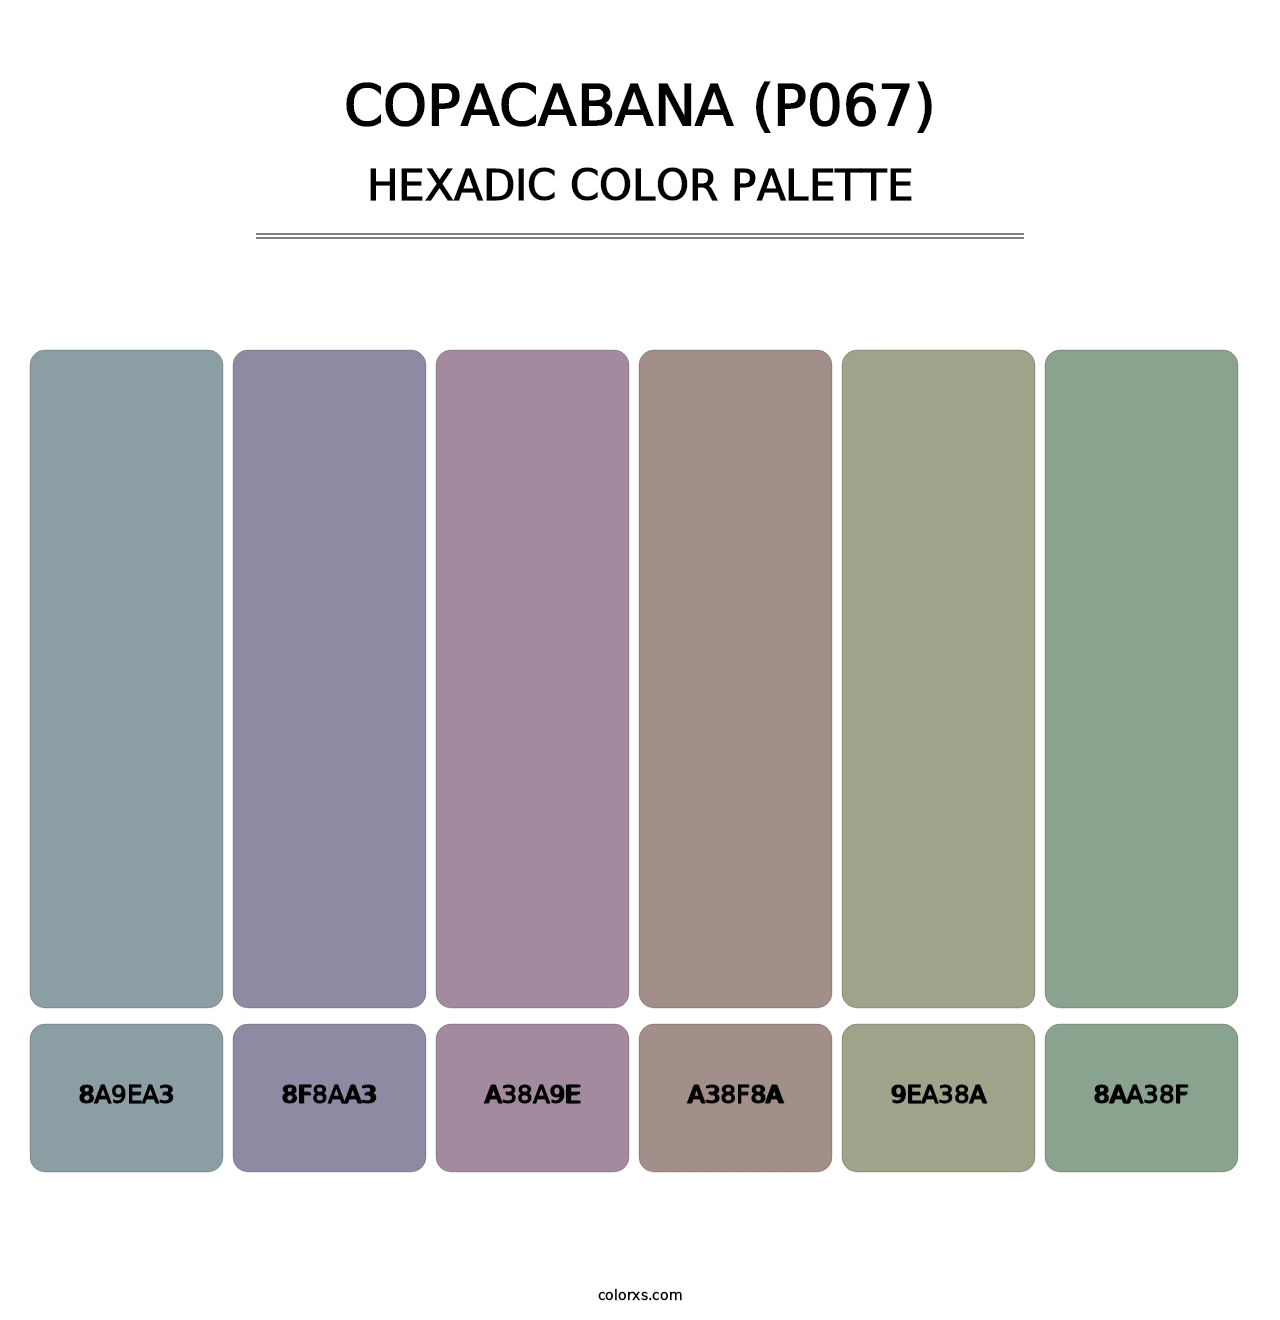 Copacabana (P067) - Hexadic Color Palette